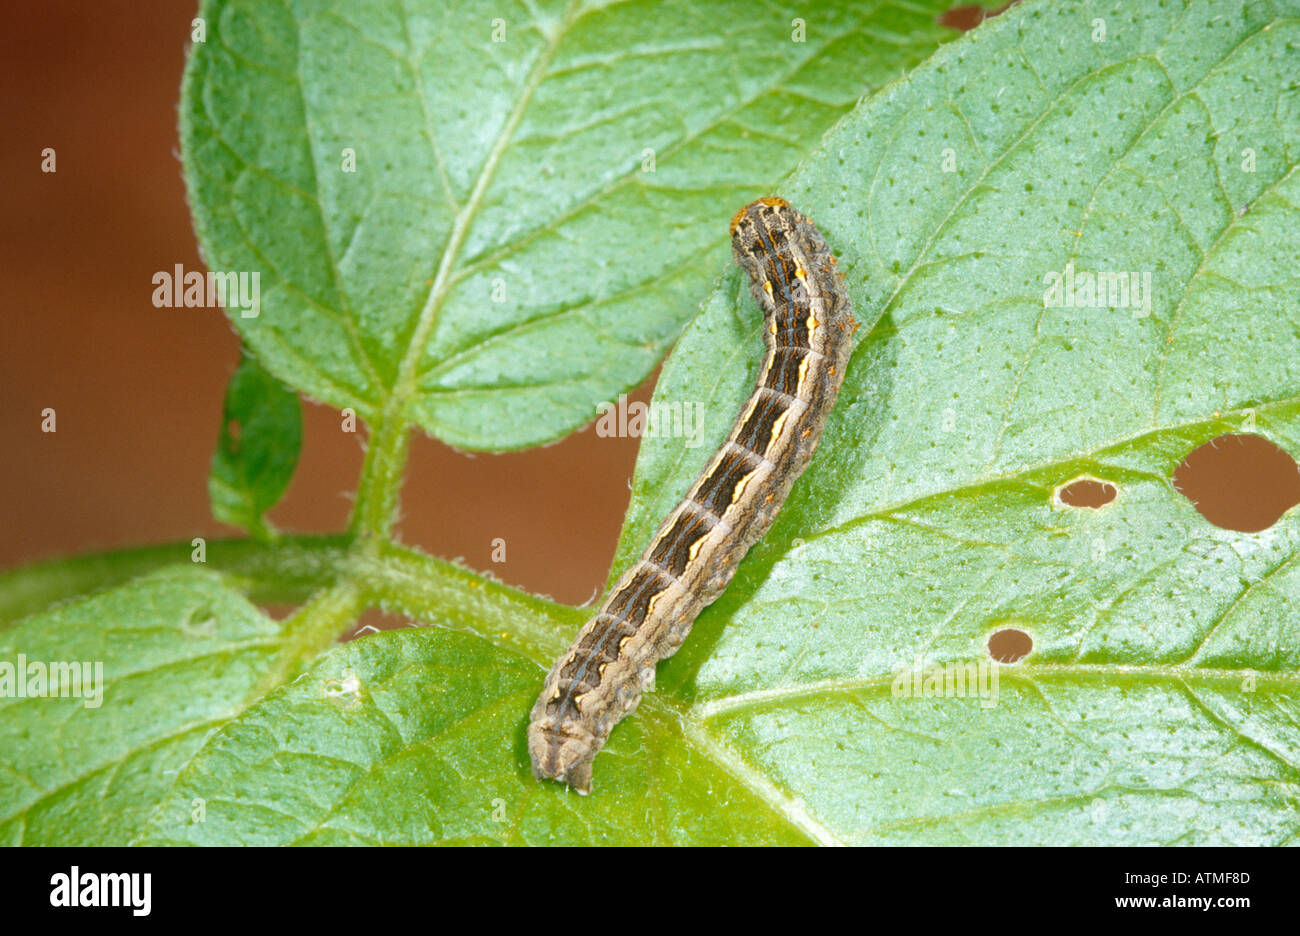 Caterpillar on potato leaf Stock Photo